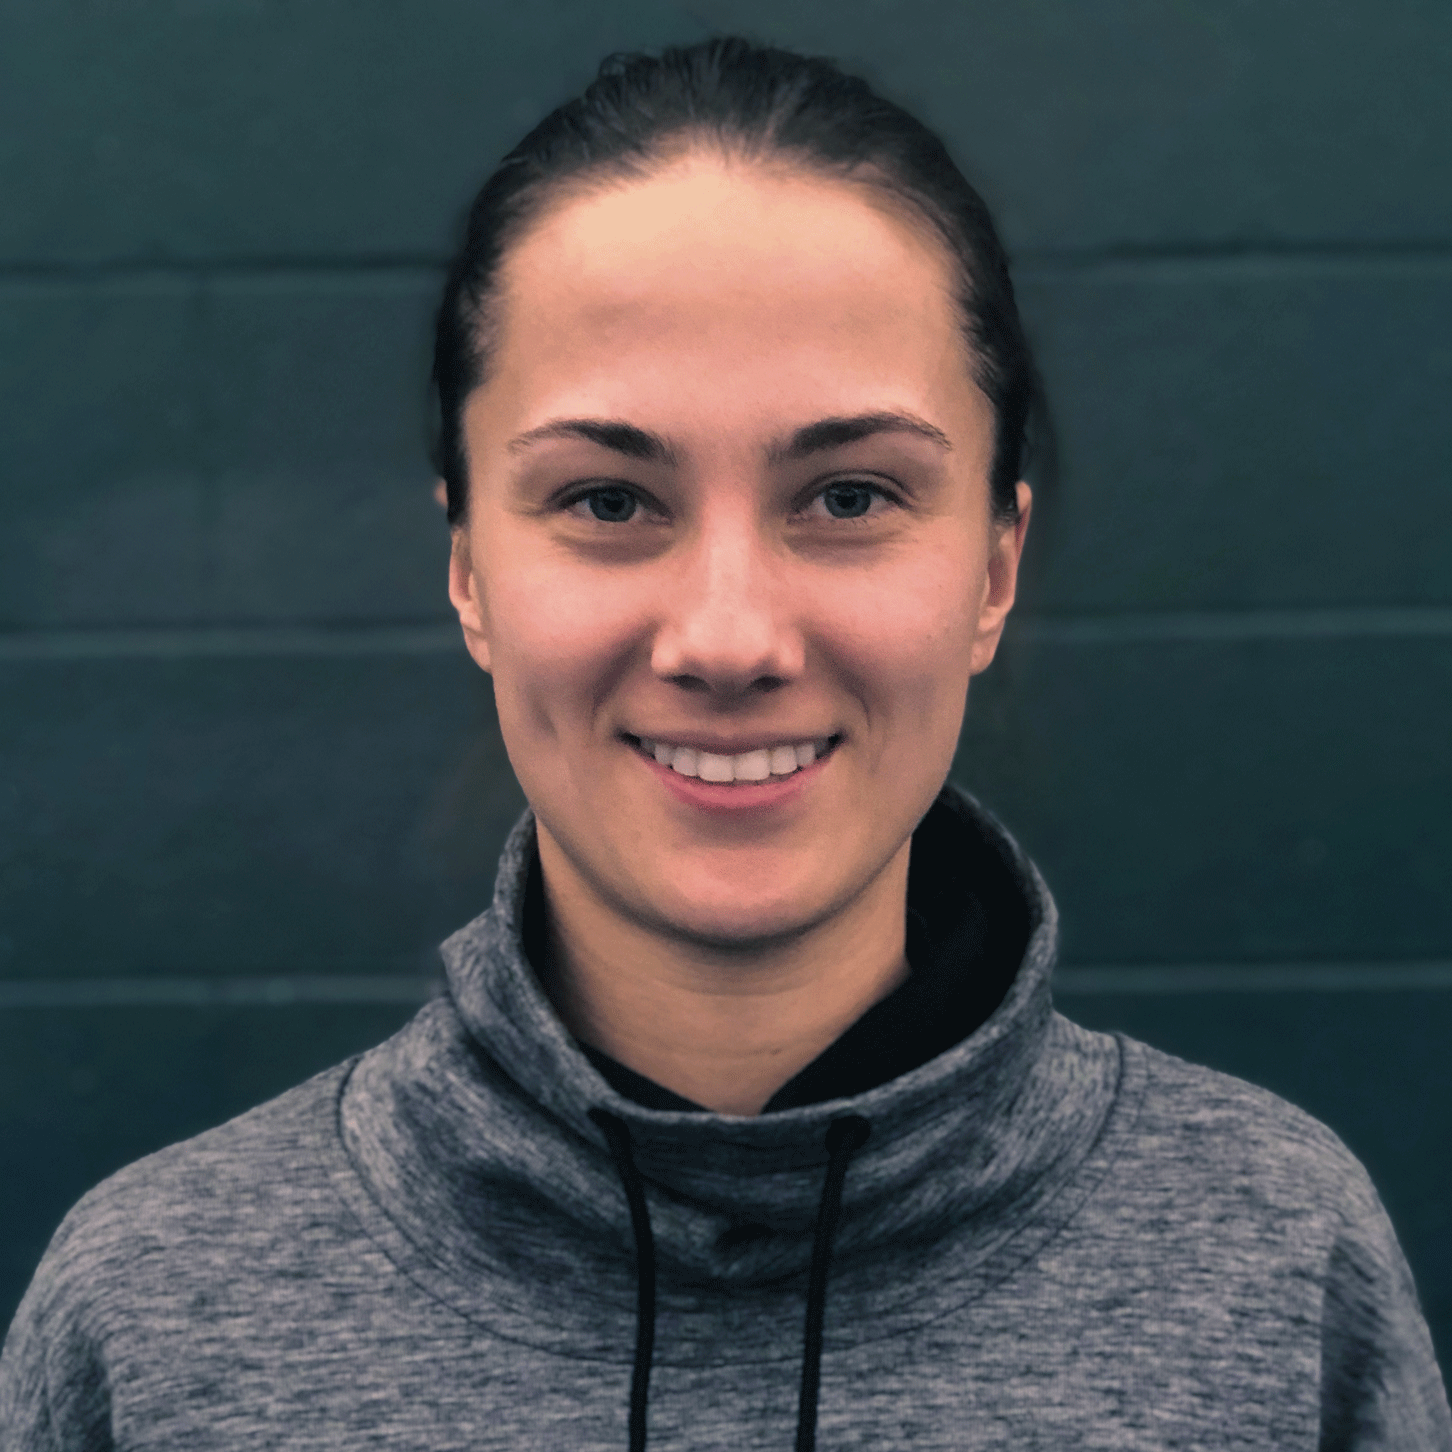 Alexandra R. teaches tennis lessons in Watertown, MA